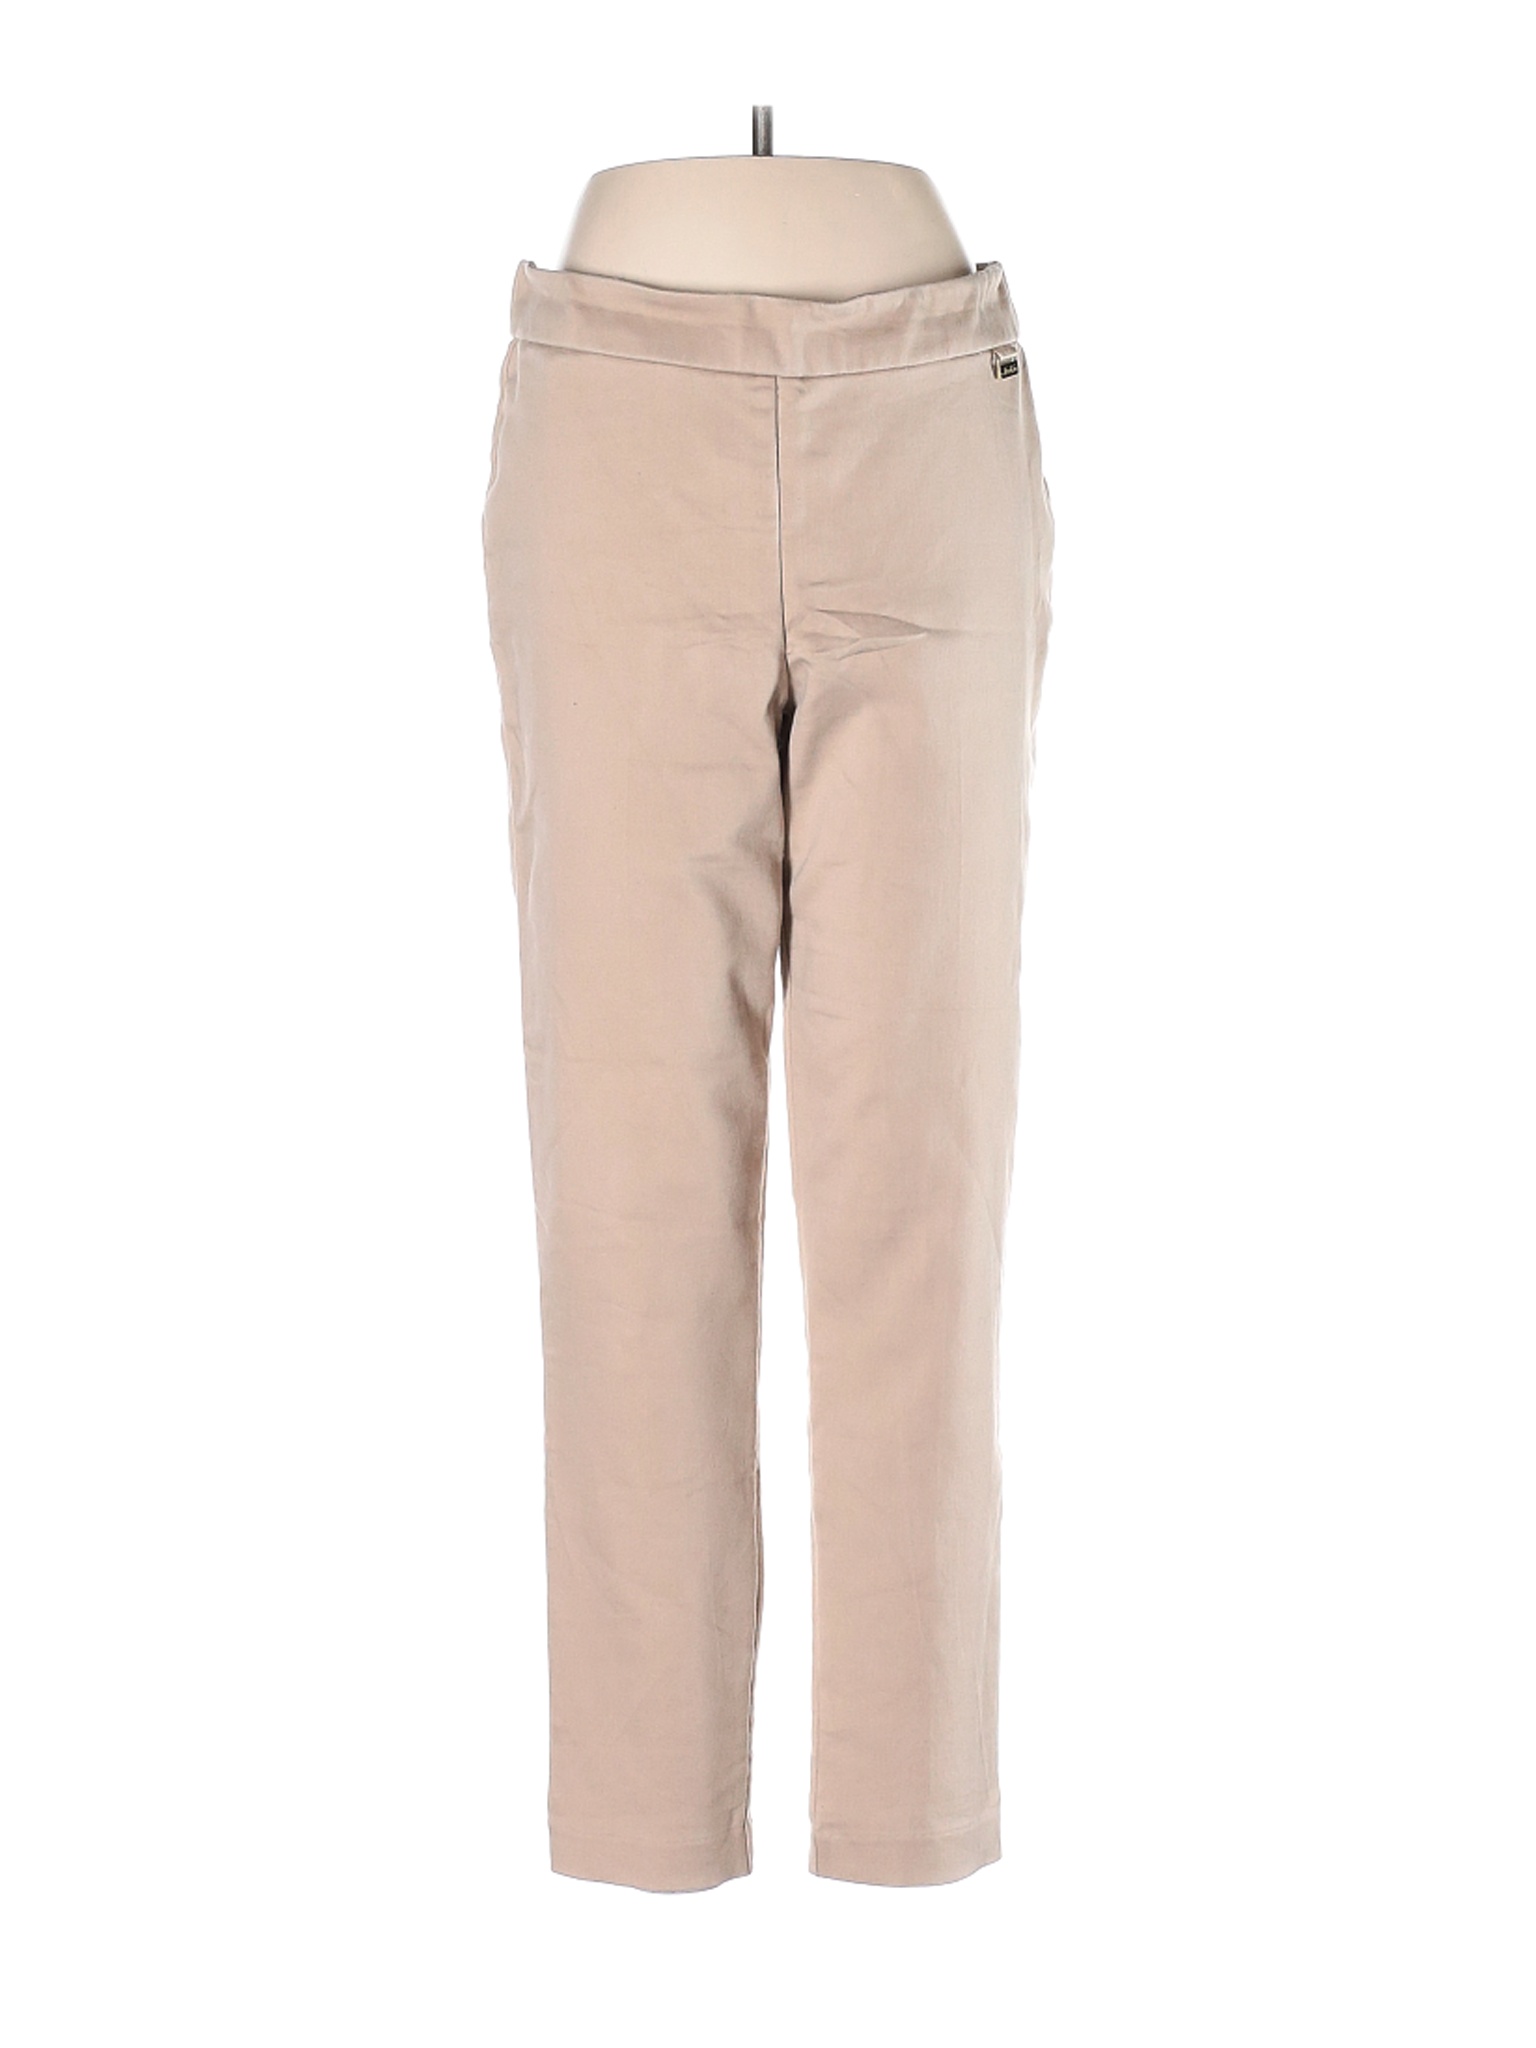 Calvin Klein Women Brown Casual Pants M | eBay